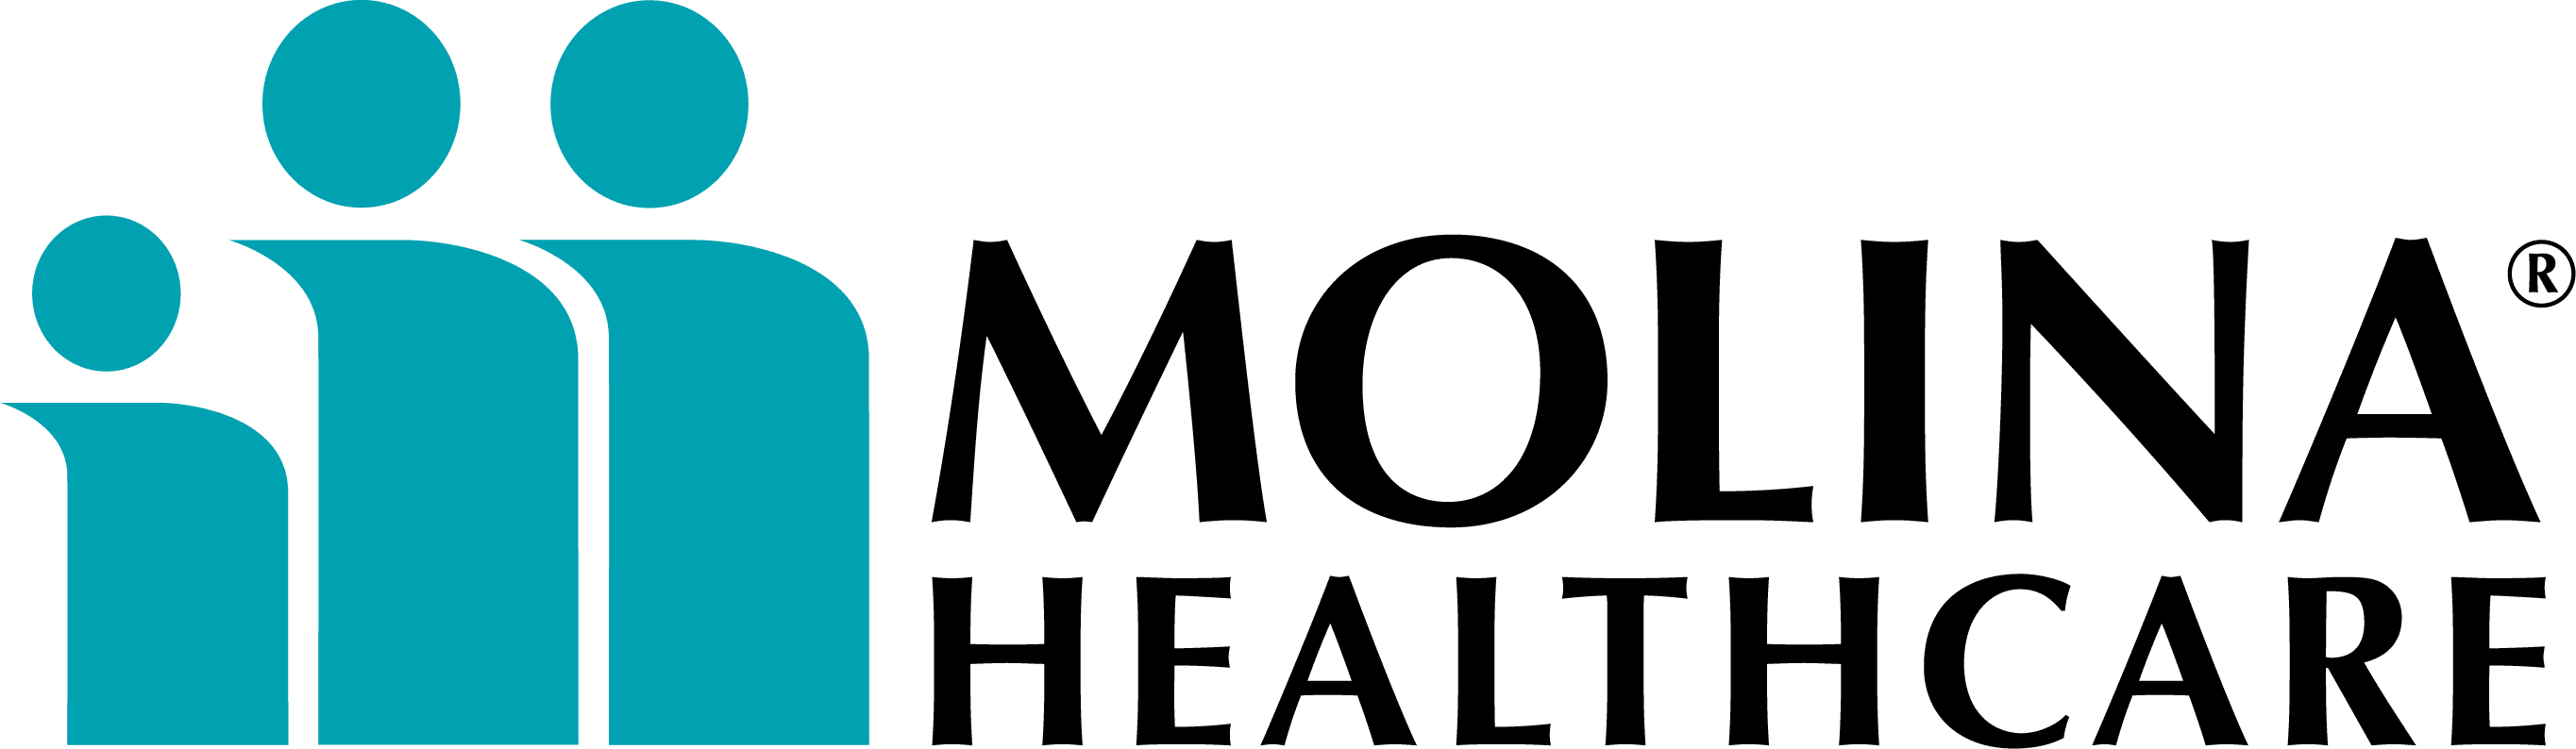 SC_Molina Healthcare Logo_CMYK